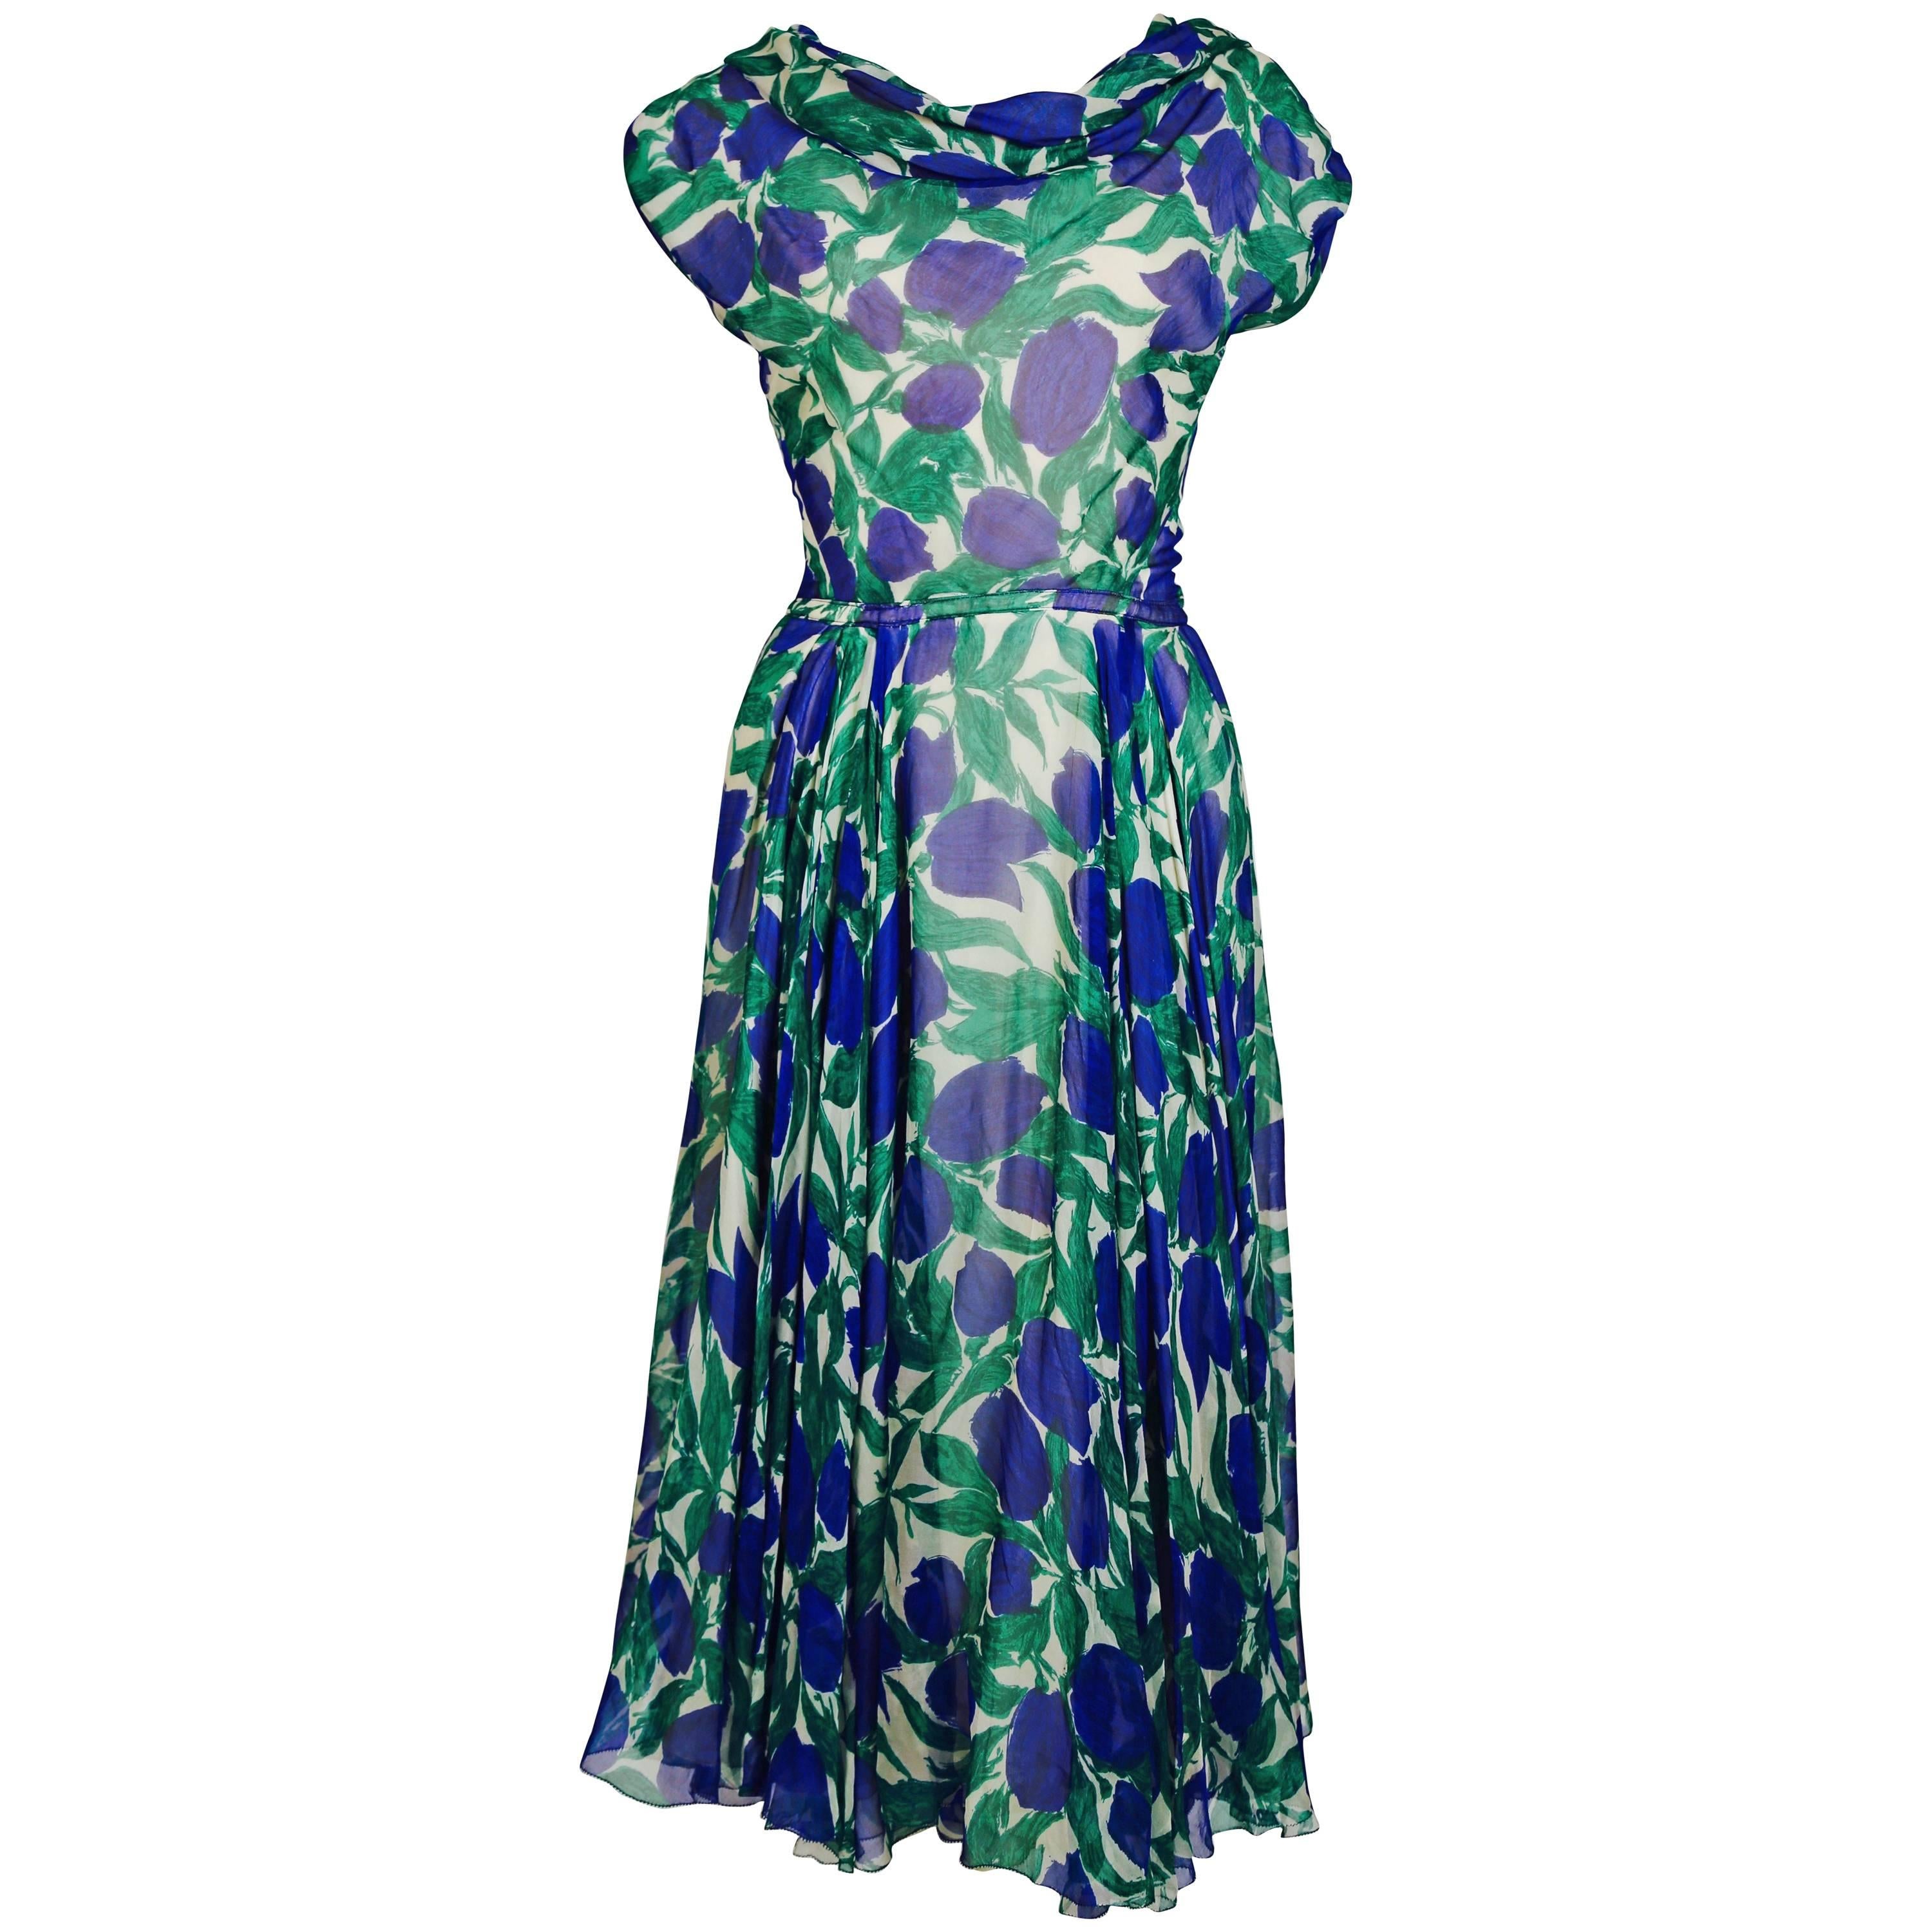 1950's BONWIT TELLER vibrant floral silk dress